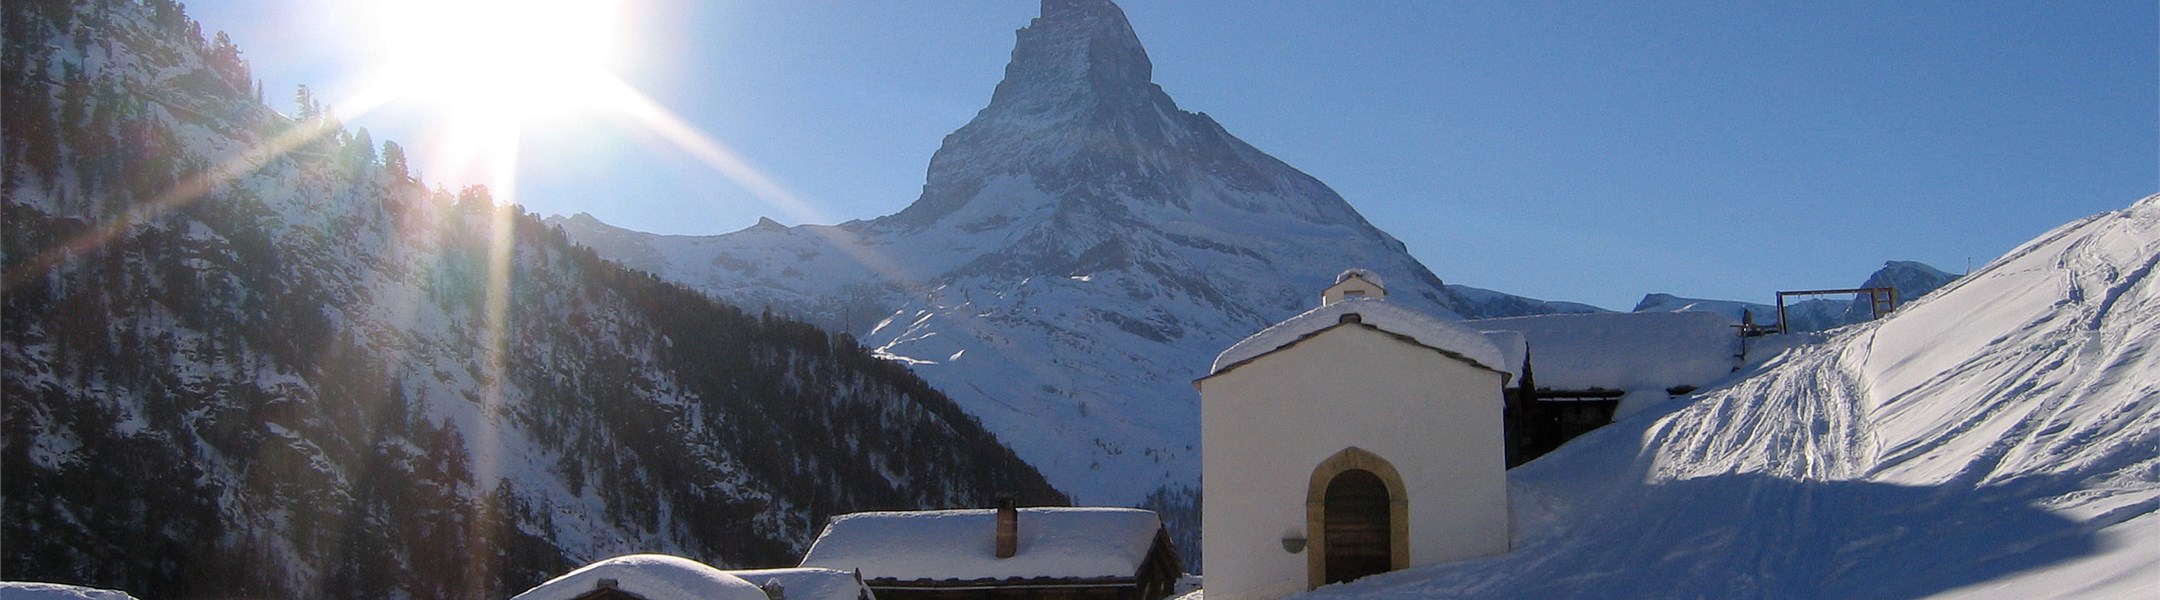 Matterhornblick in Findeln bei Zermatt